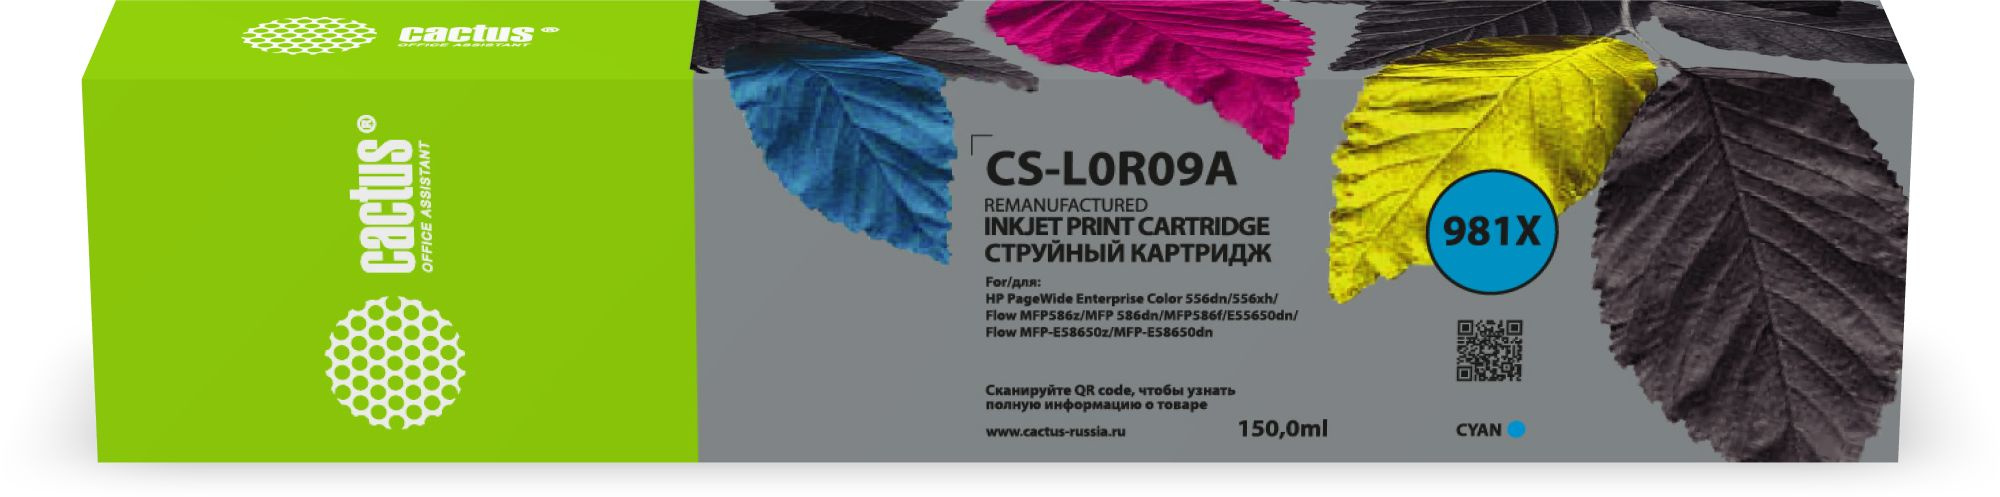 Картридж струйный Cactus CS-L0R09A 981X голуб.пигм. (150мл) для HP PageWide 556dn Enterprise/586dn